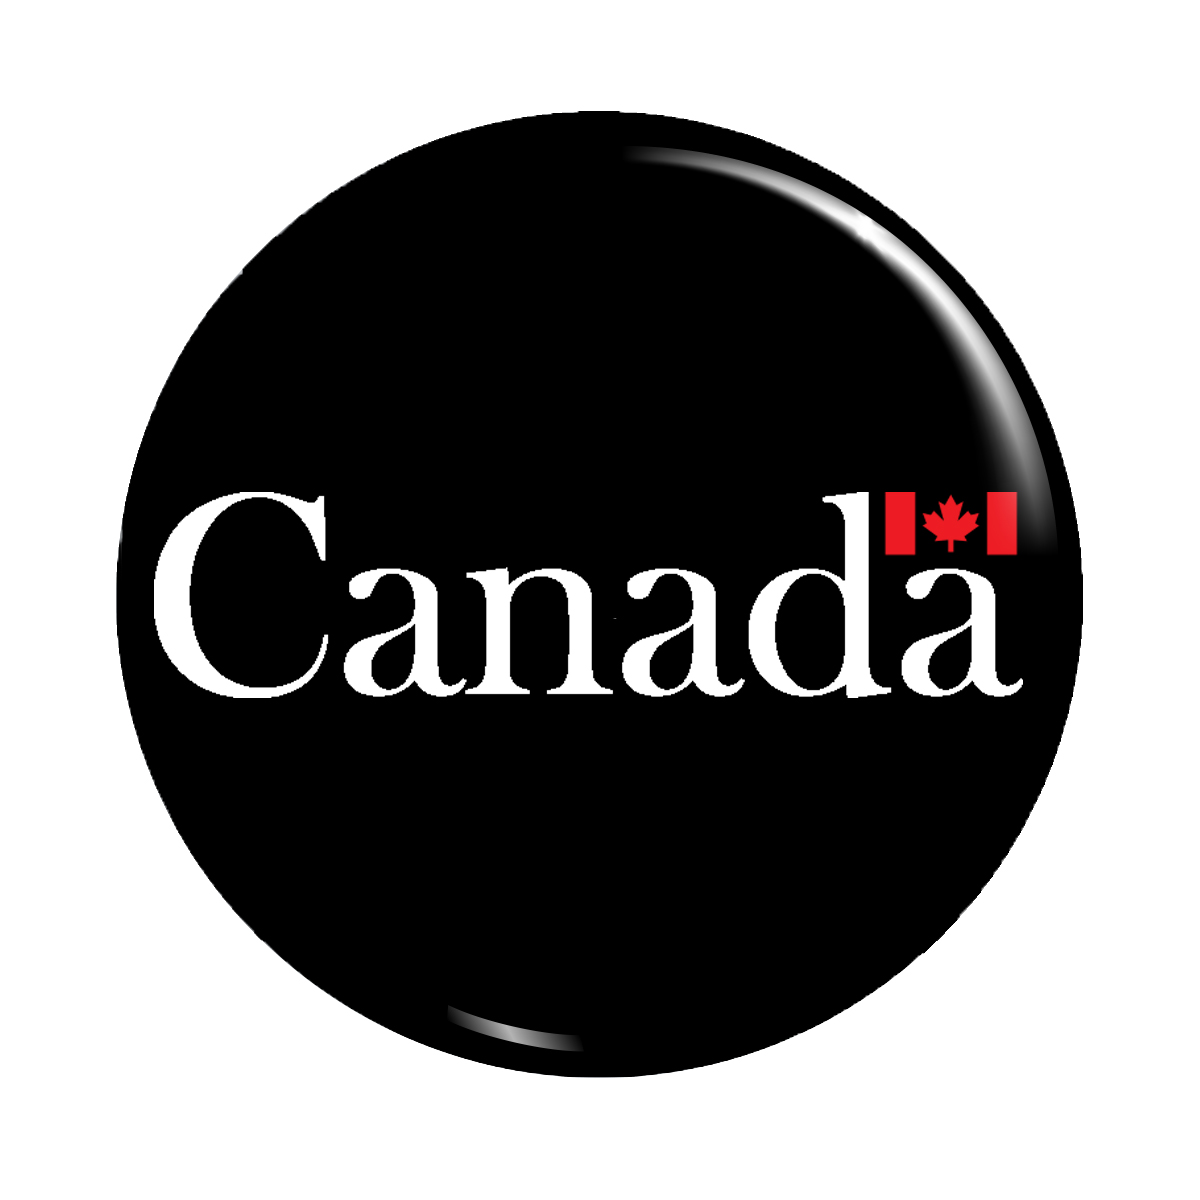  پیکسل تیداکس مدل کانادا کد TiD124